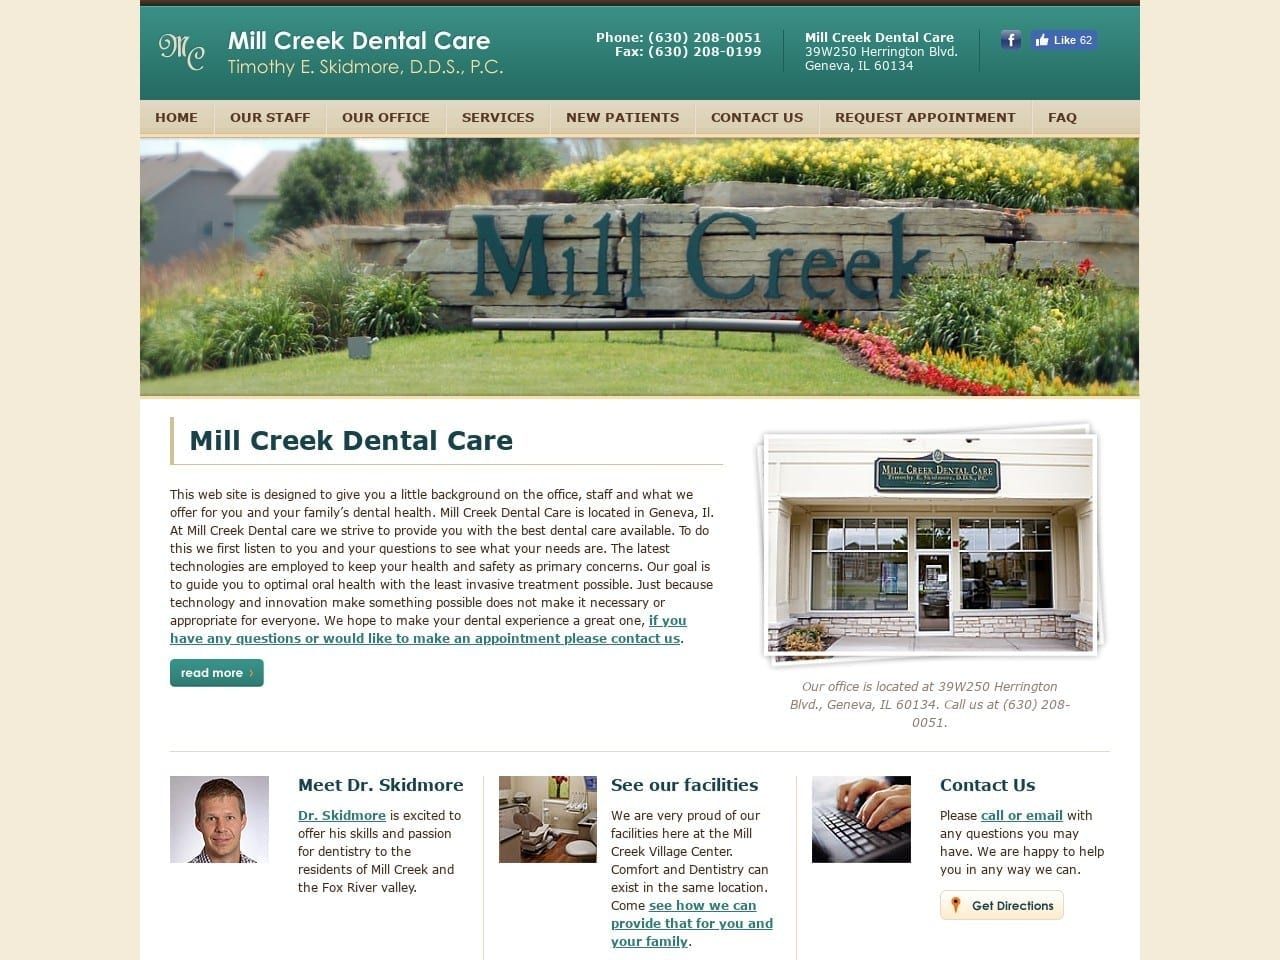 Mill Creek Dental Care Website Screenshot from millcreekdentalcare.com